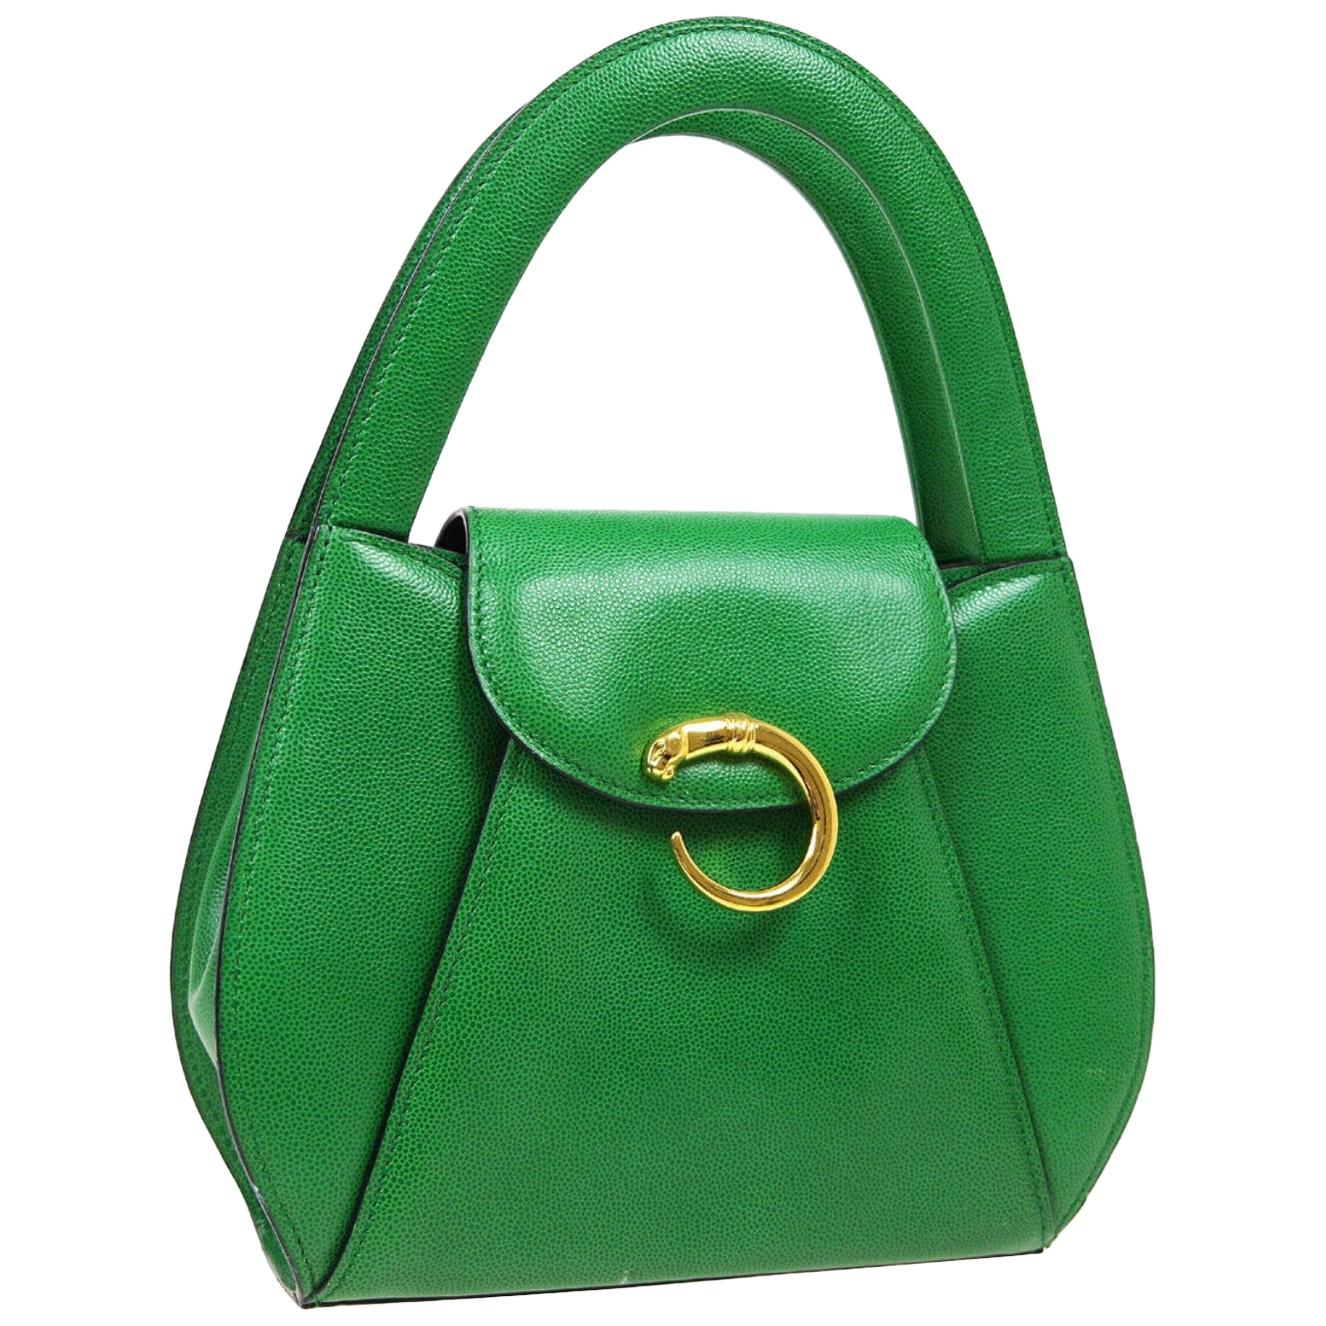 Cartier Green Leather Gold Emblem Kelly Style Top Handle Satchel Flap Bag